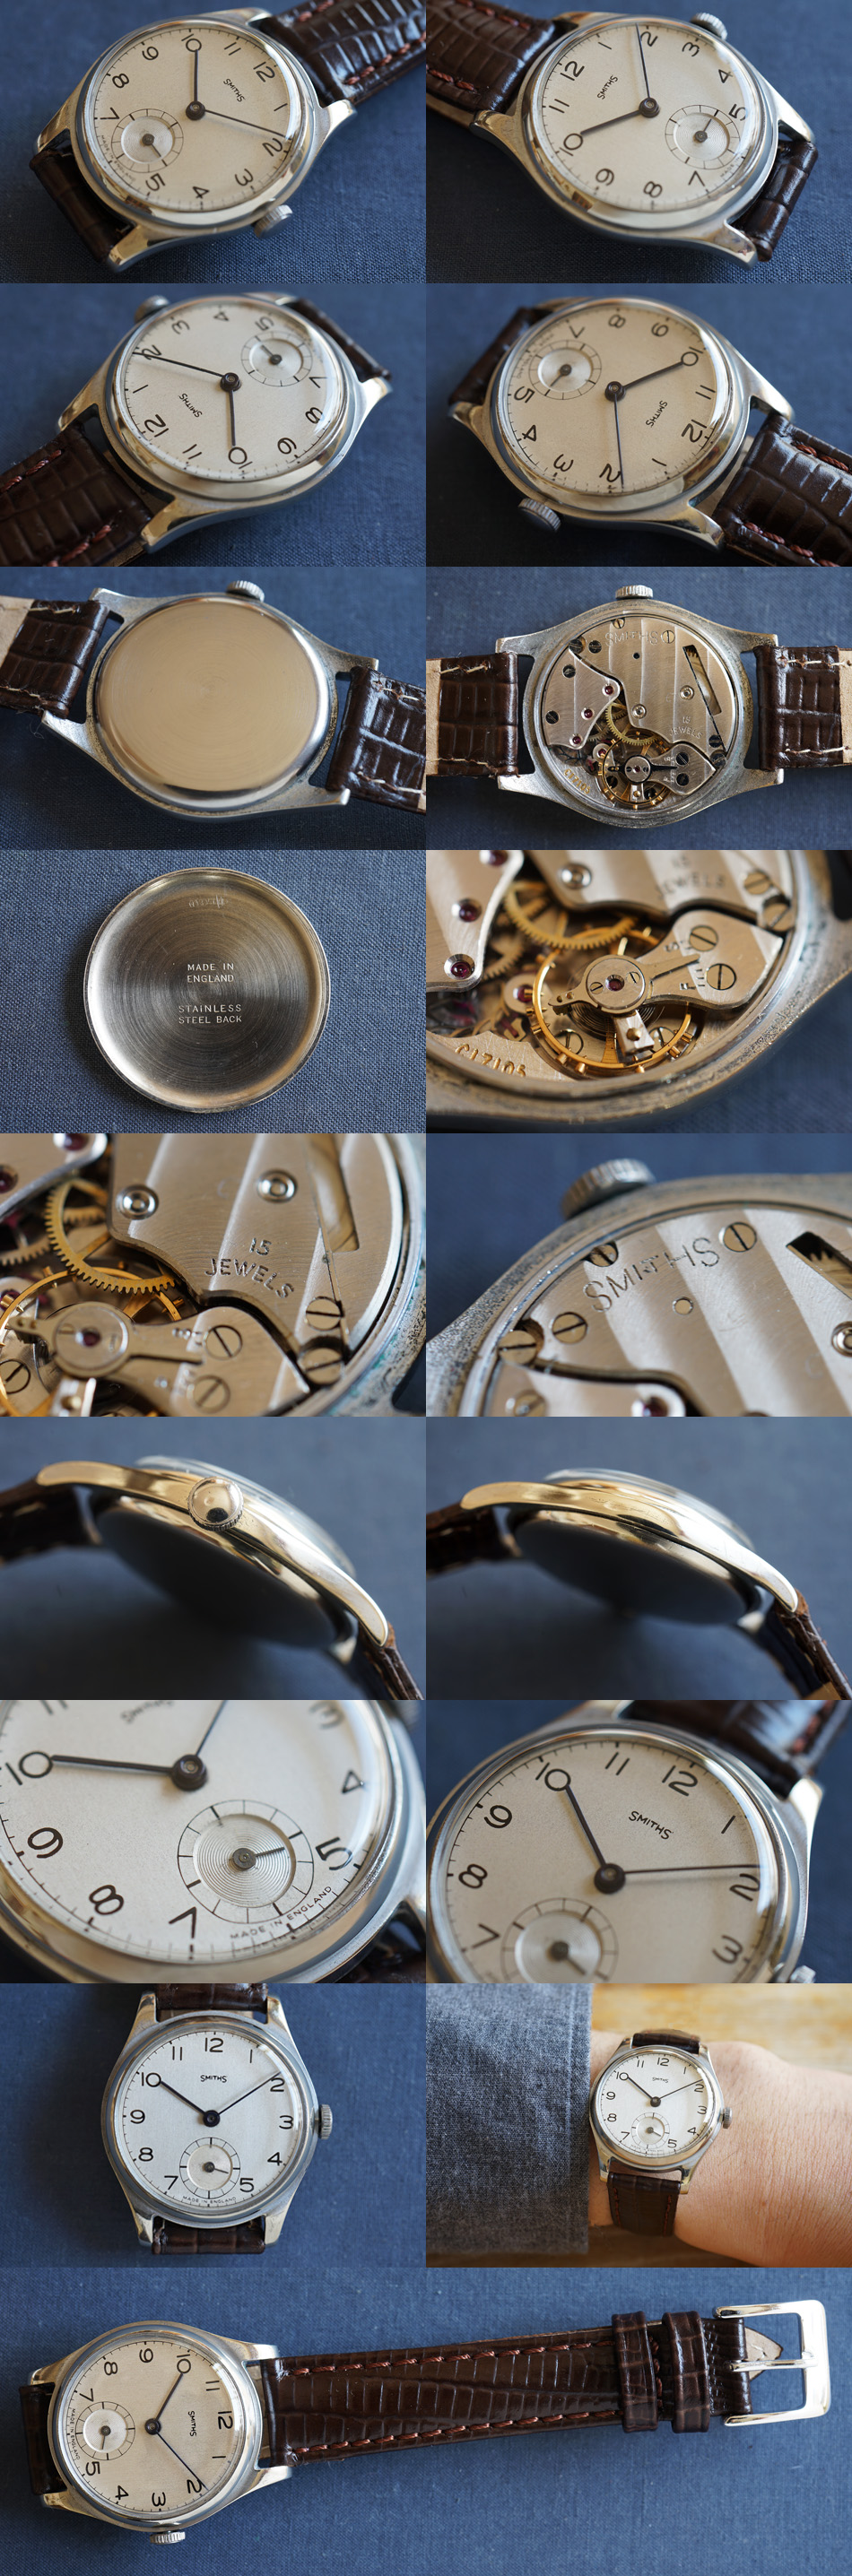 3085B 1940年代英国スミス社製ニッケル無垢1215 15石手巻懐中時計 365